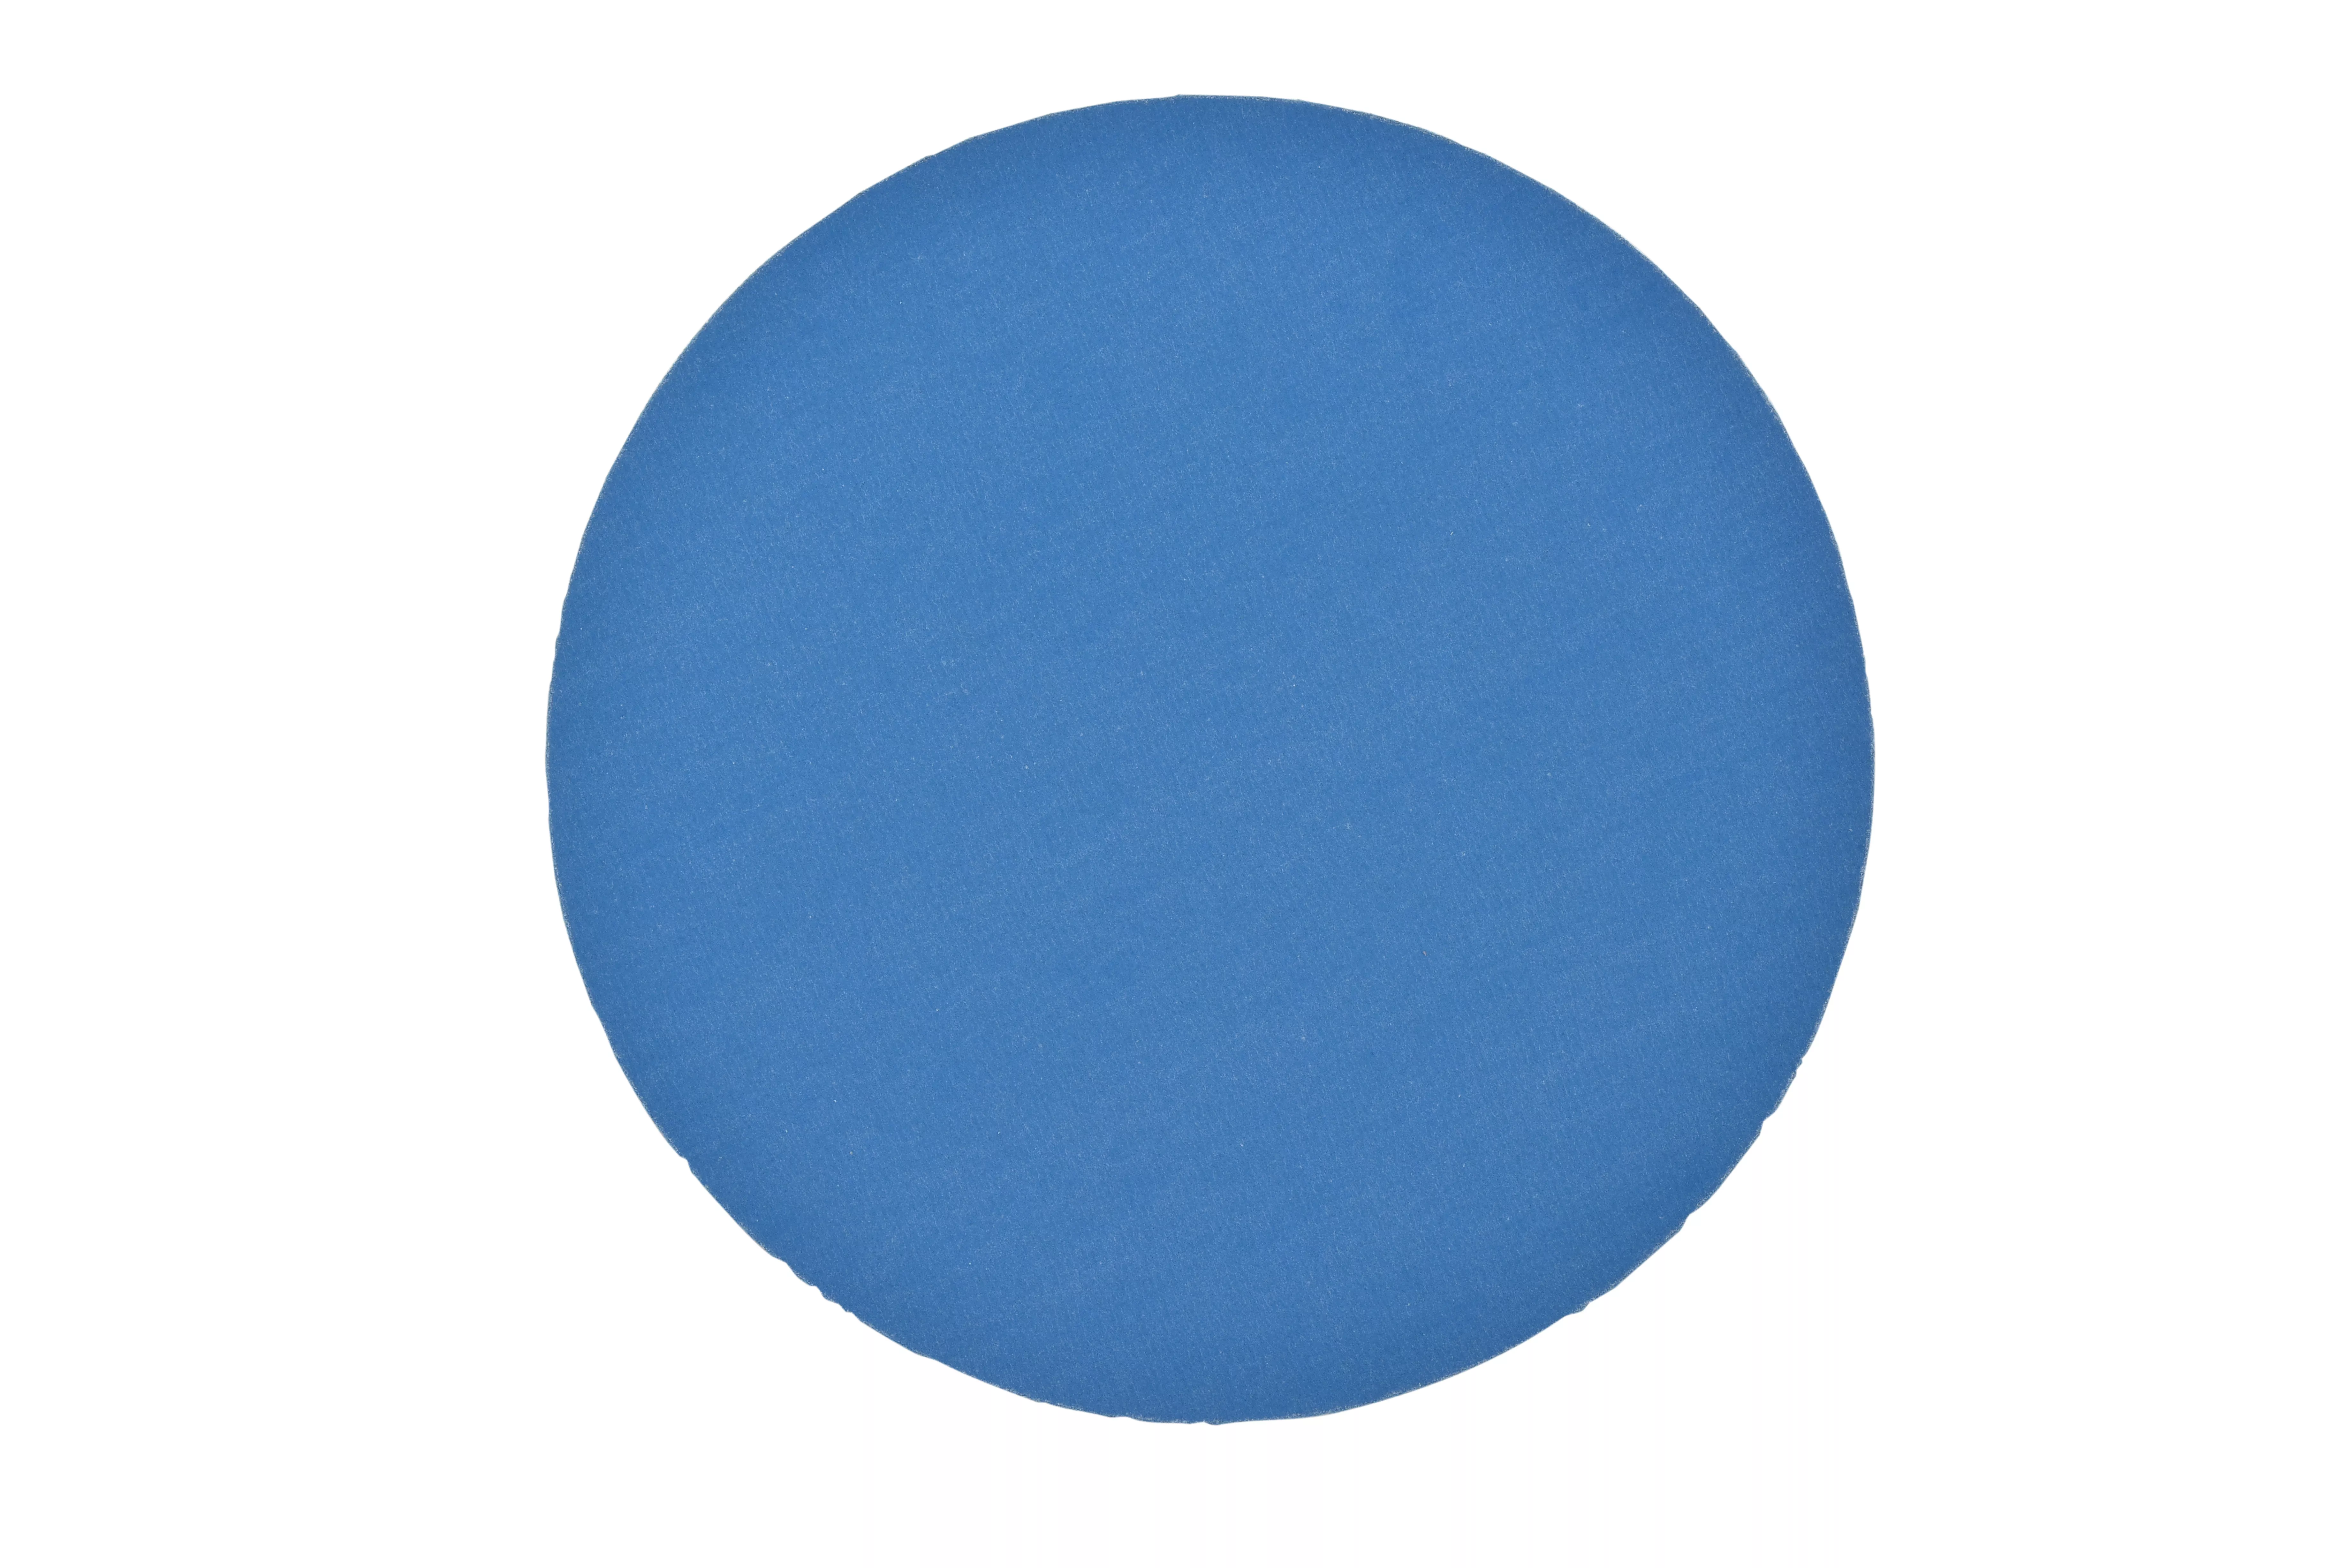 3M™ Hookit™ Blue Abrasive Disc, 36248, 6 in, 400 grade, No Hole, 50 discs per carton, 4 cartons per case